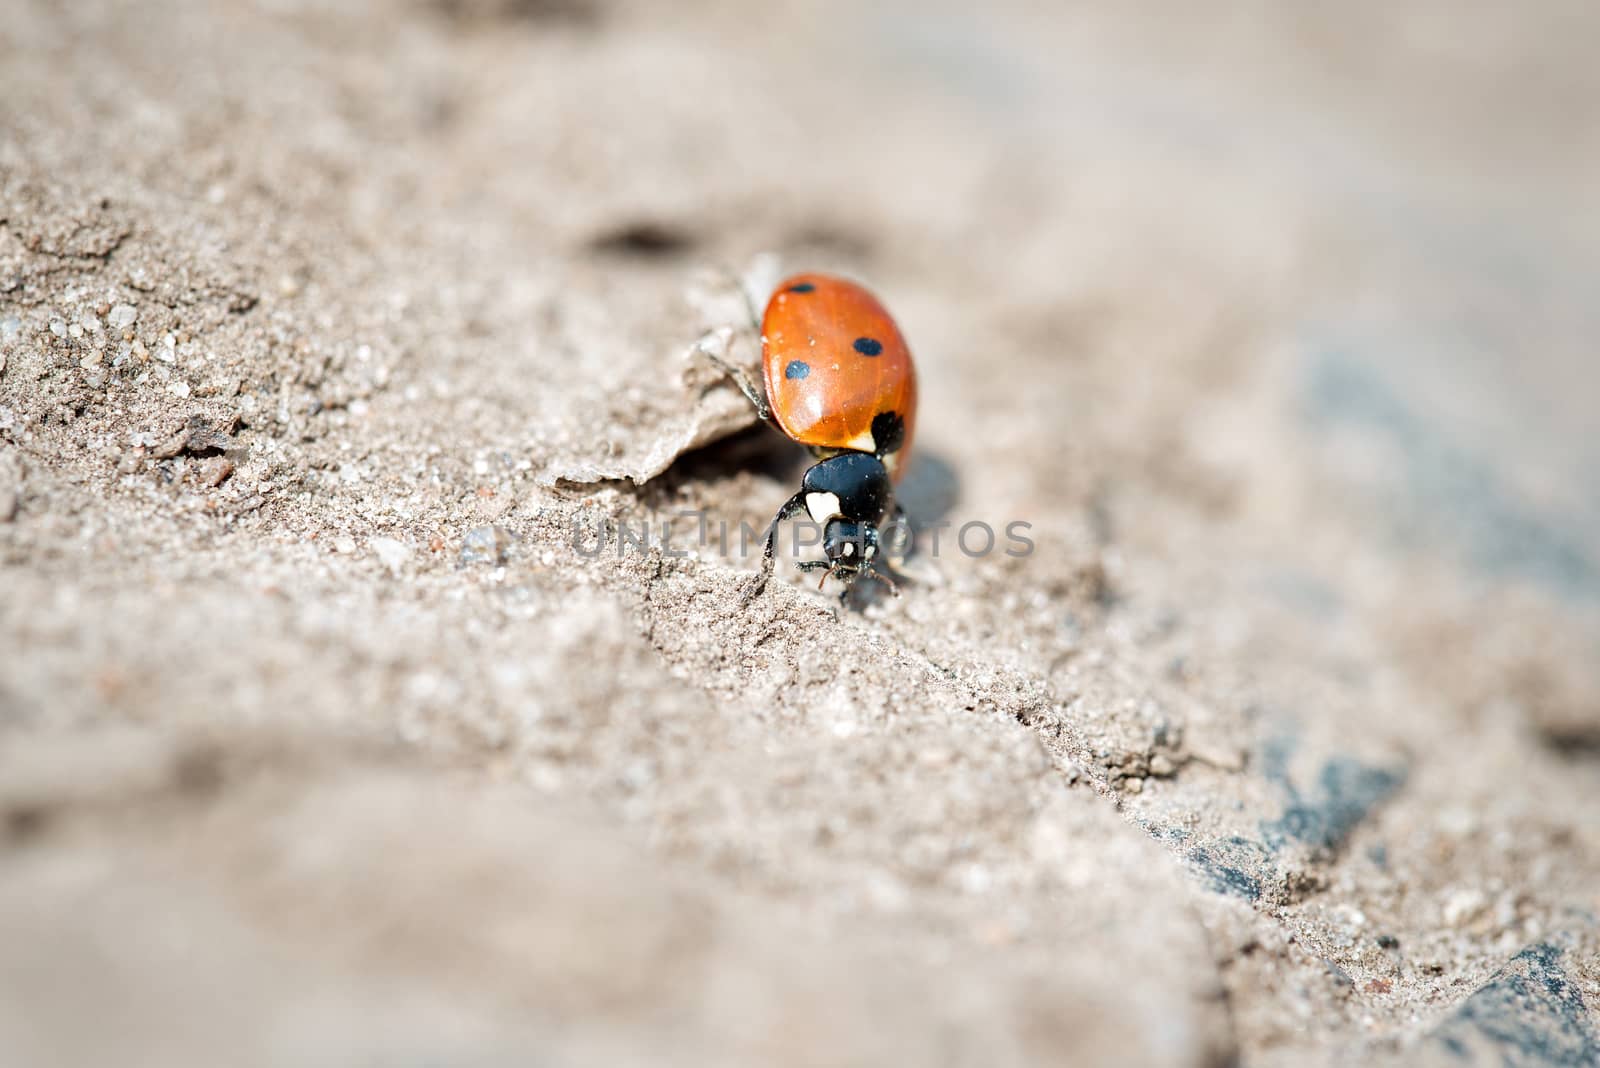 Seven-spot ladybird on sand, bokeh effect background